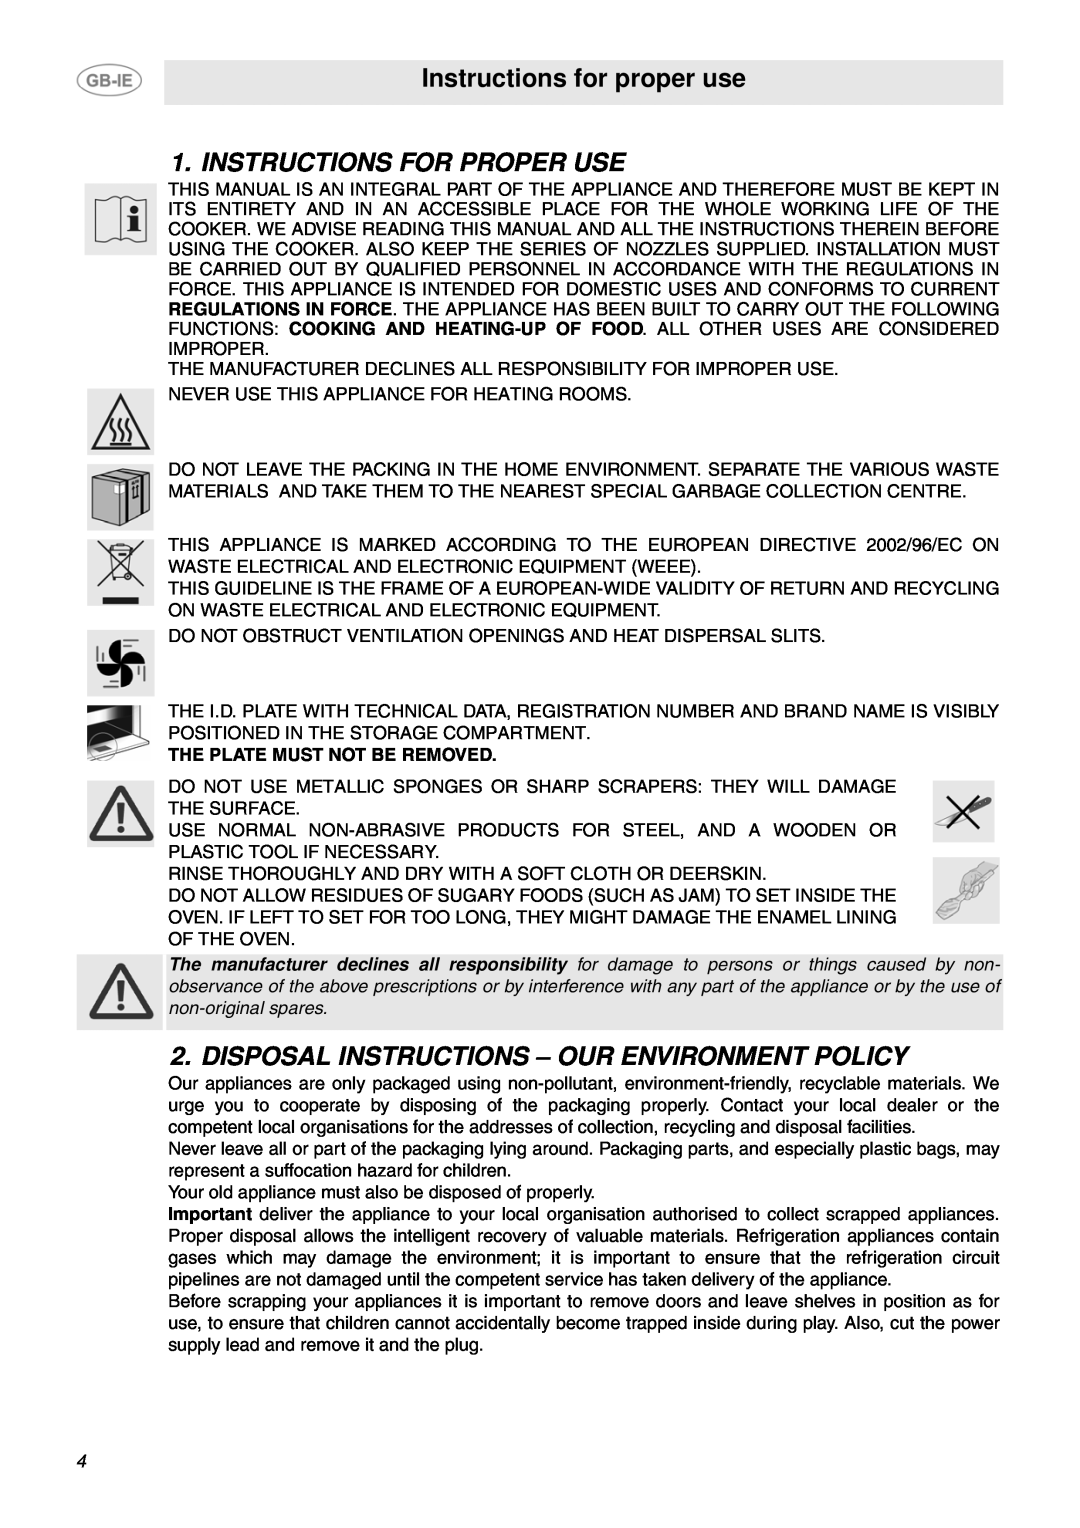 Smeg SUK91CMX5 Instructions for proper use, Instructions For Proper Use, Disposal Instructions - Our Environment Policy 